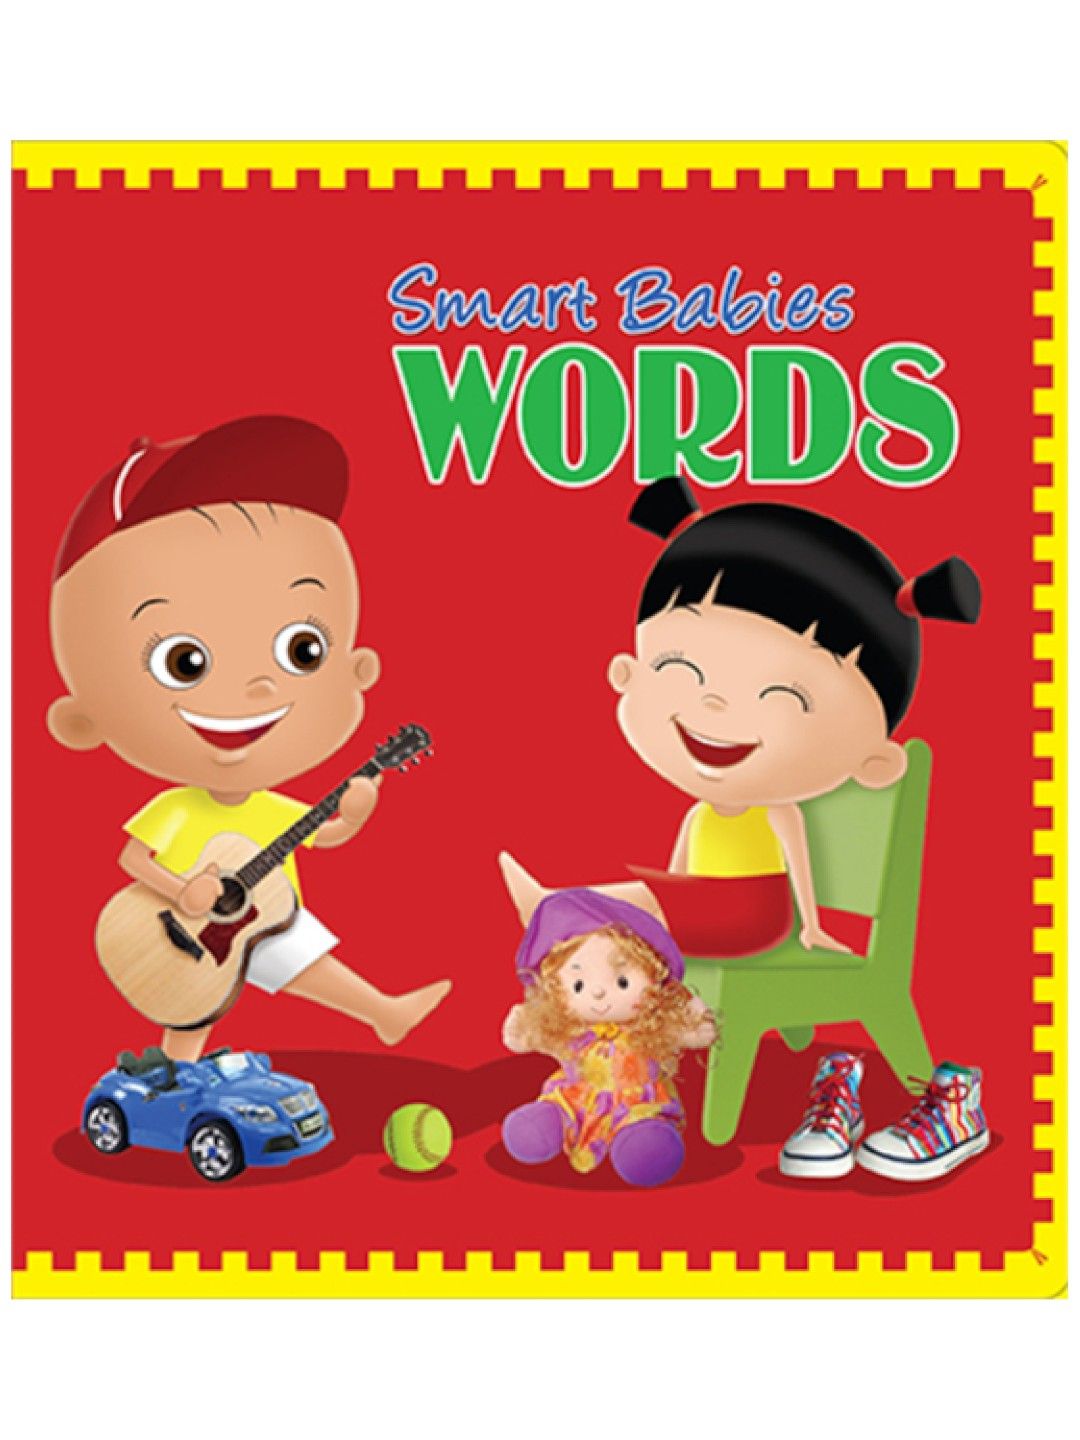 Learning is Fun Smart Babies Board Book - Words